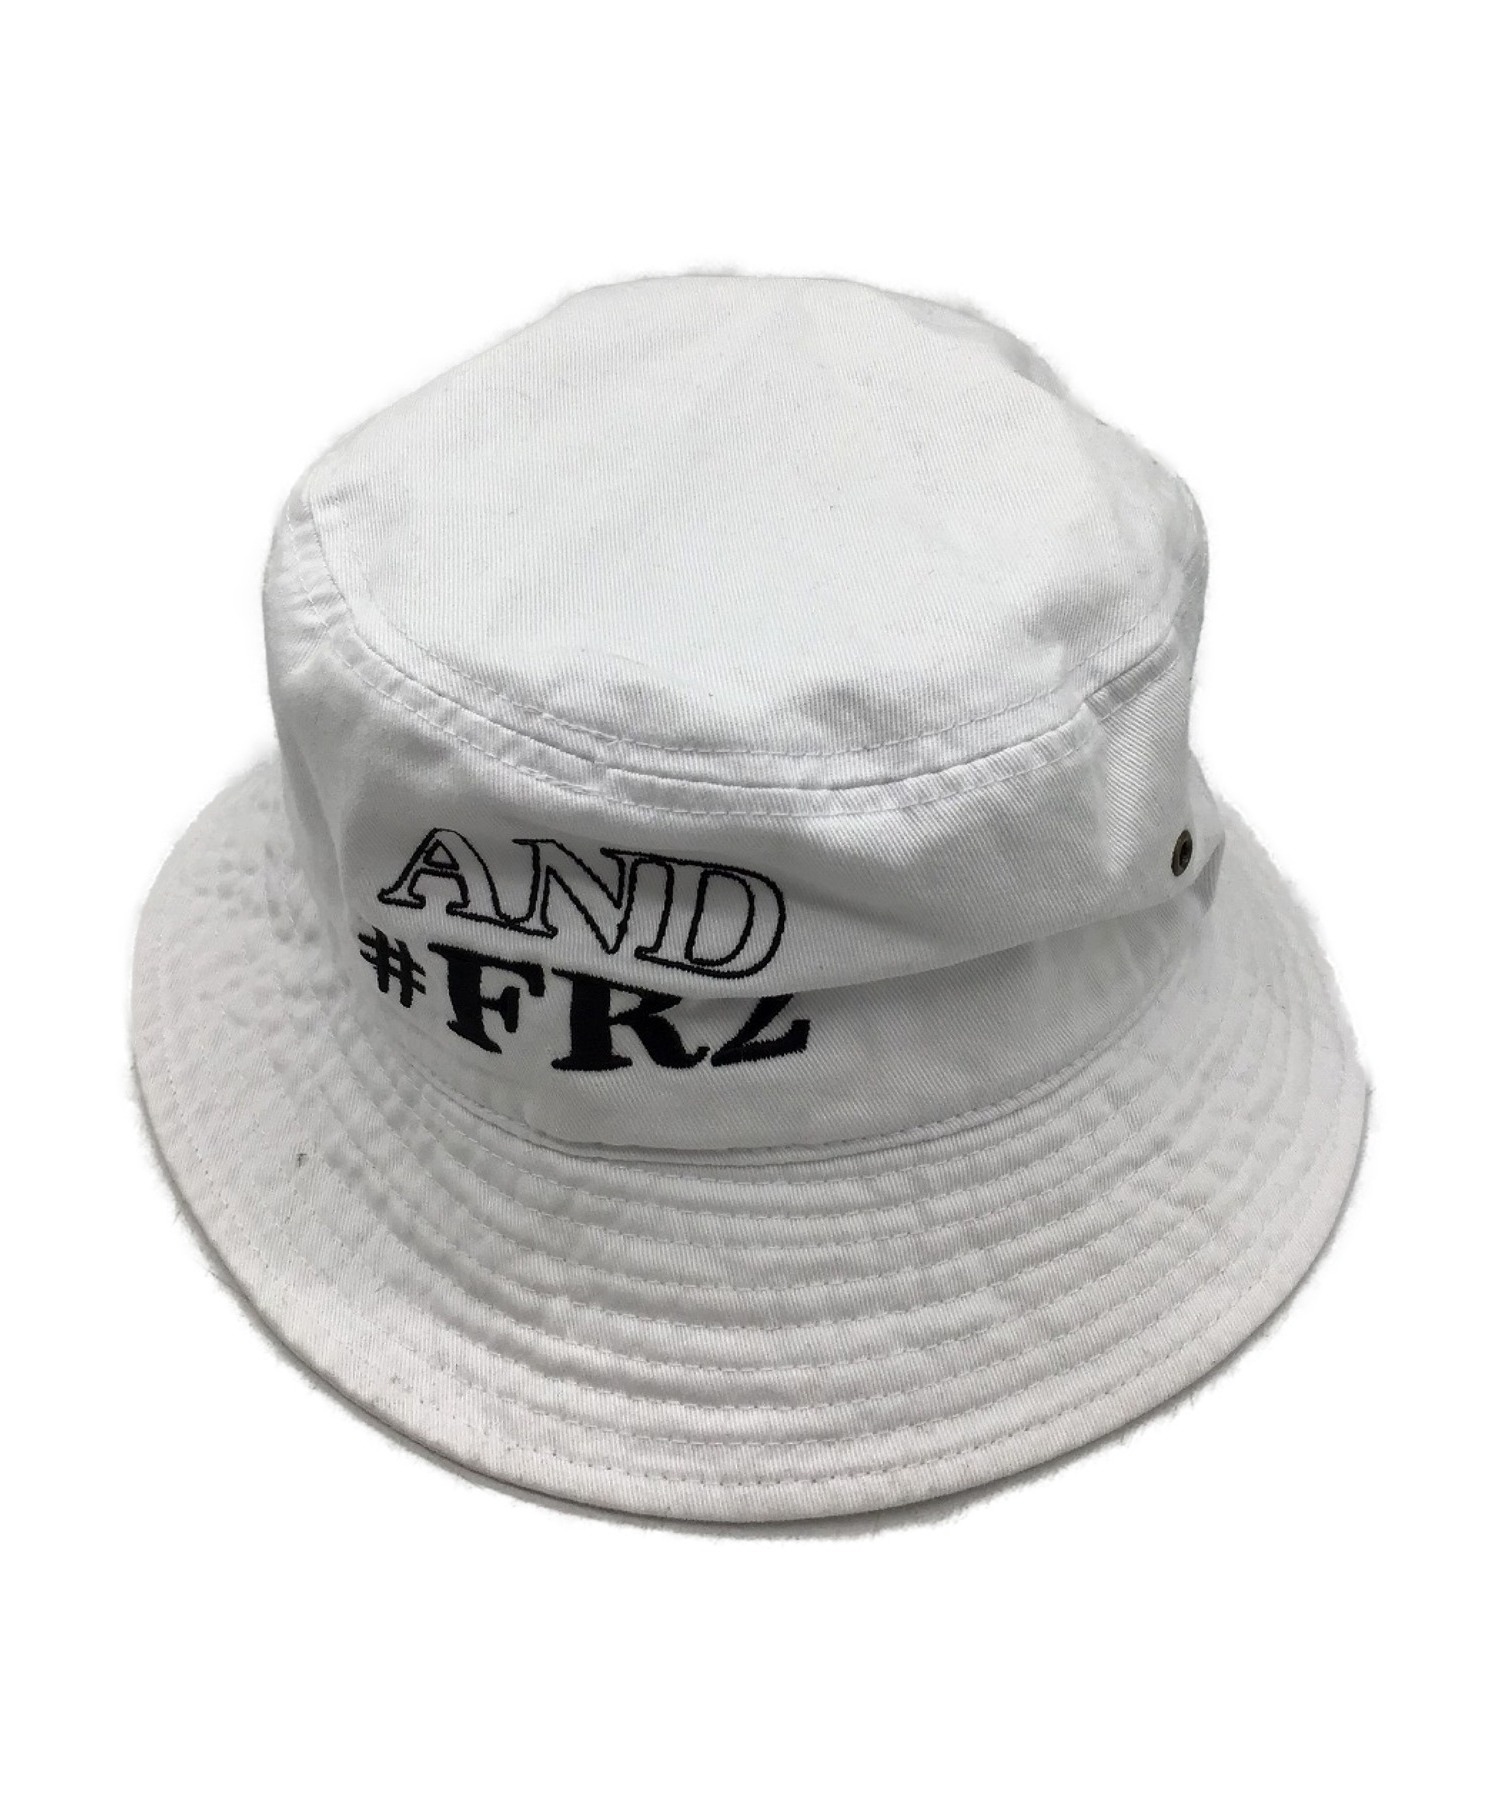 WIND AND SEA × #FR2 WIND Bucket Hat